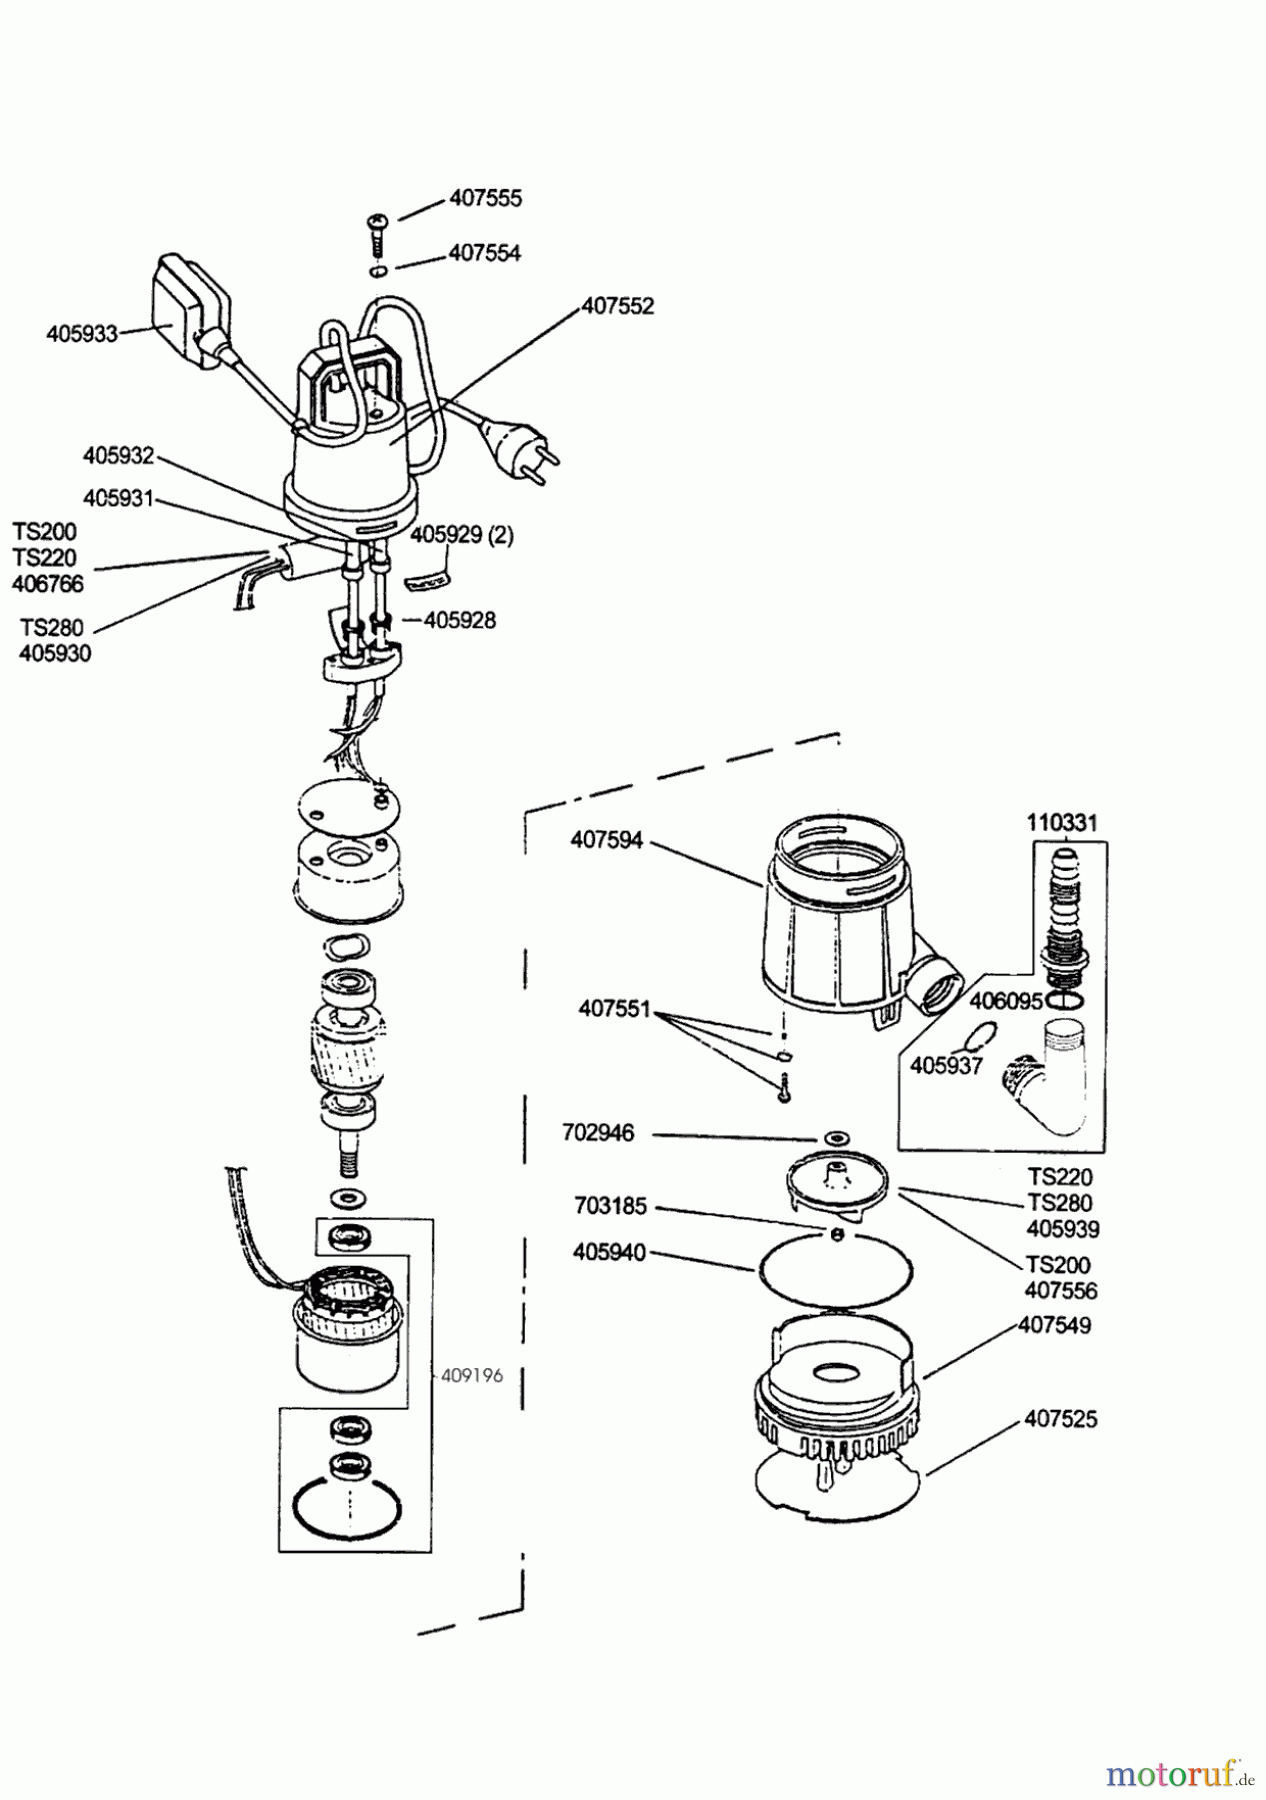  AL-KO Wassertechnik Tauchpumpen TS 280 ab 12/1996 Seite 1